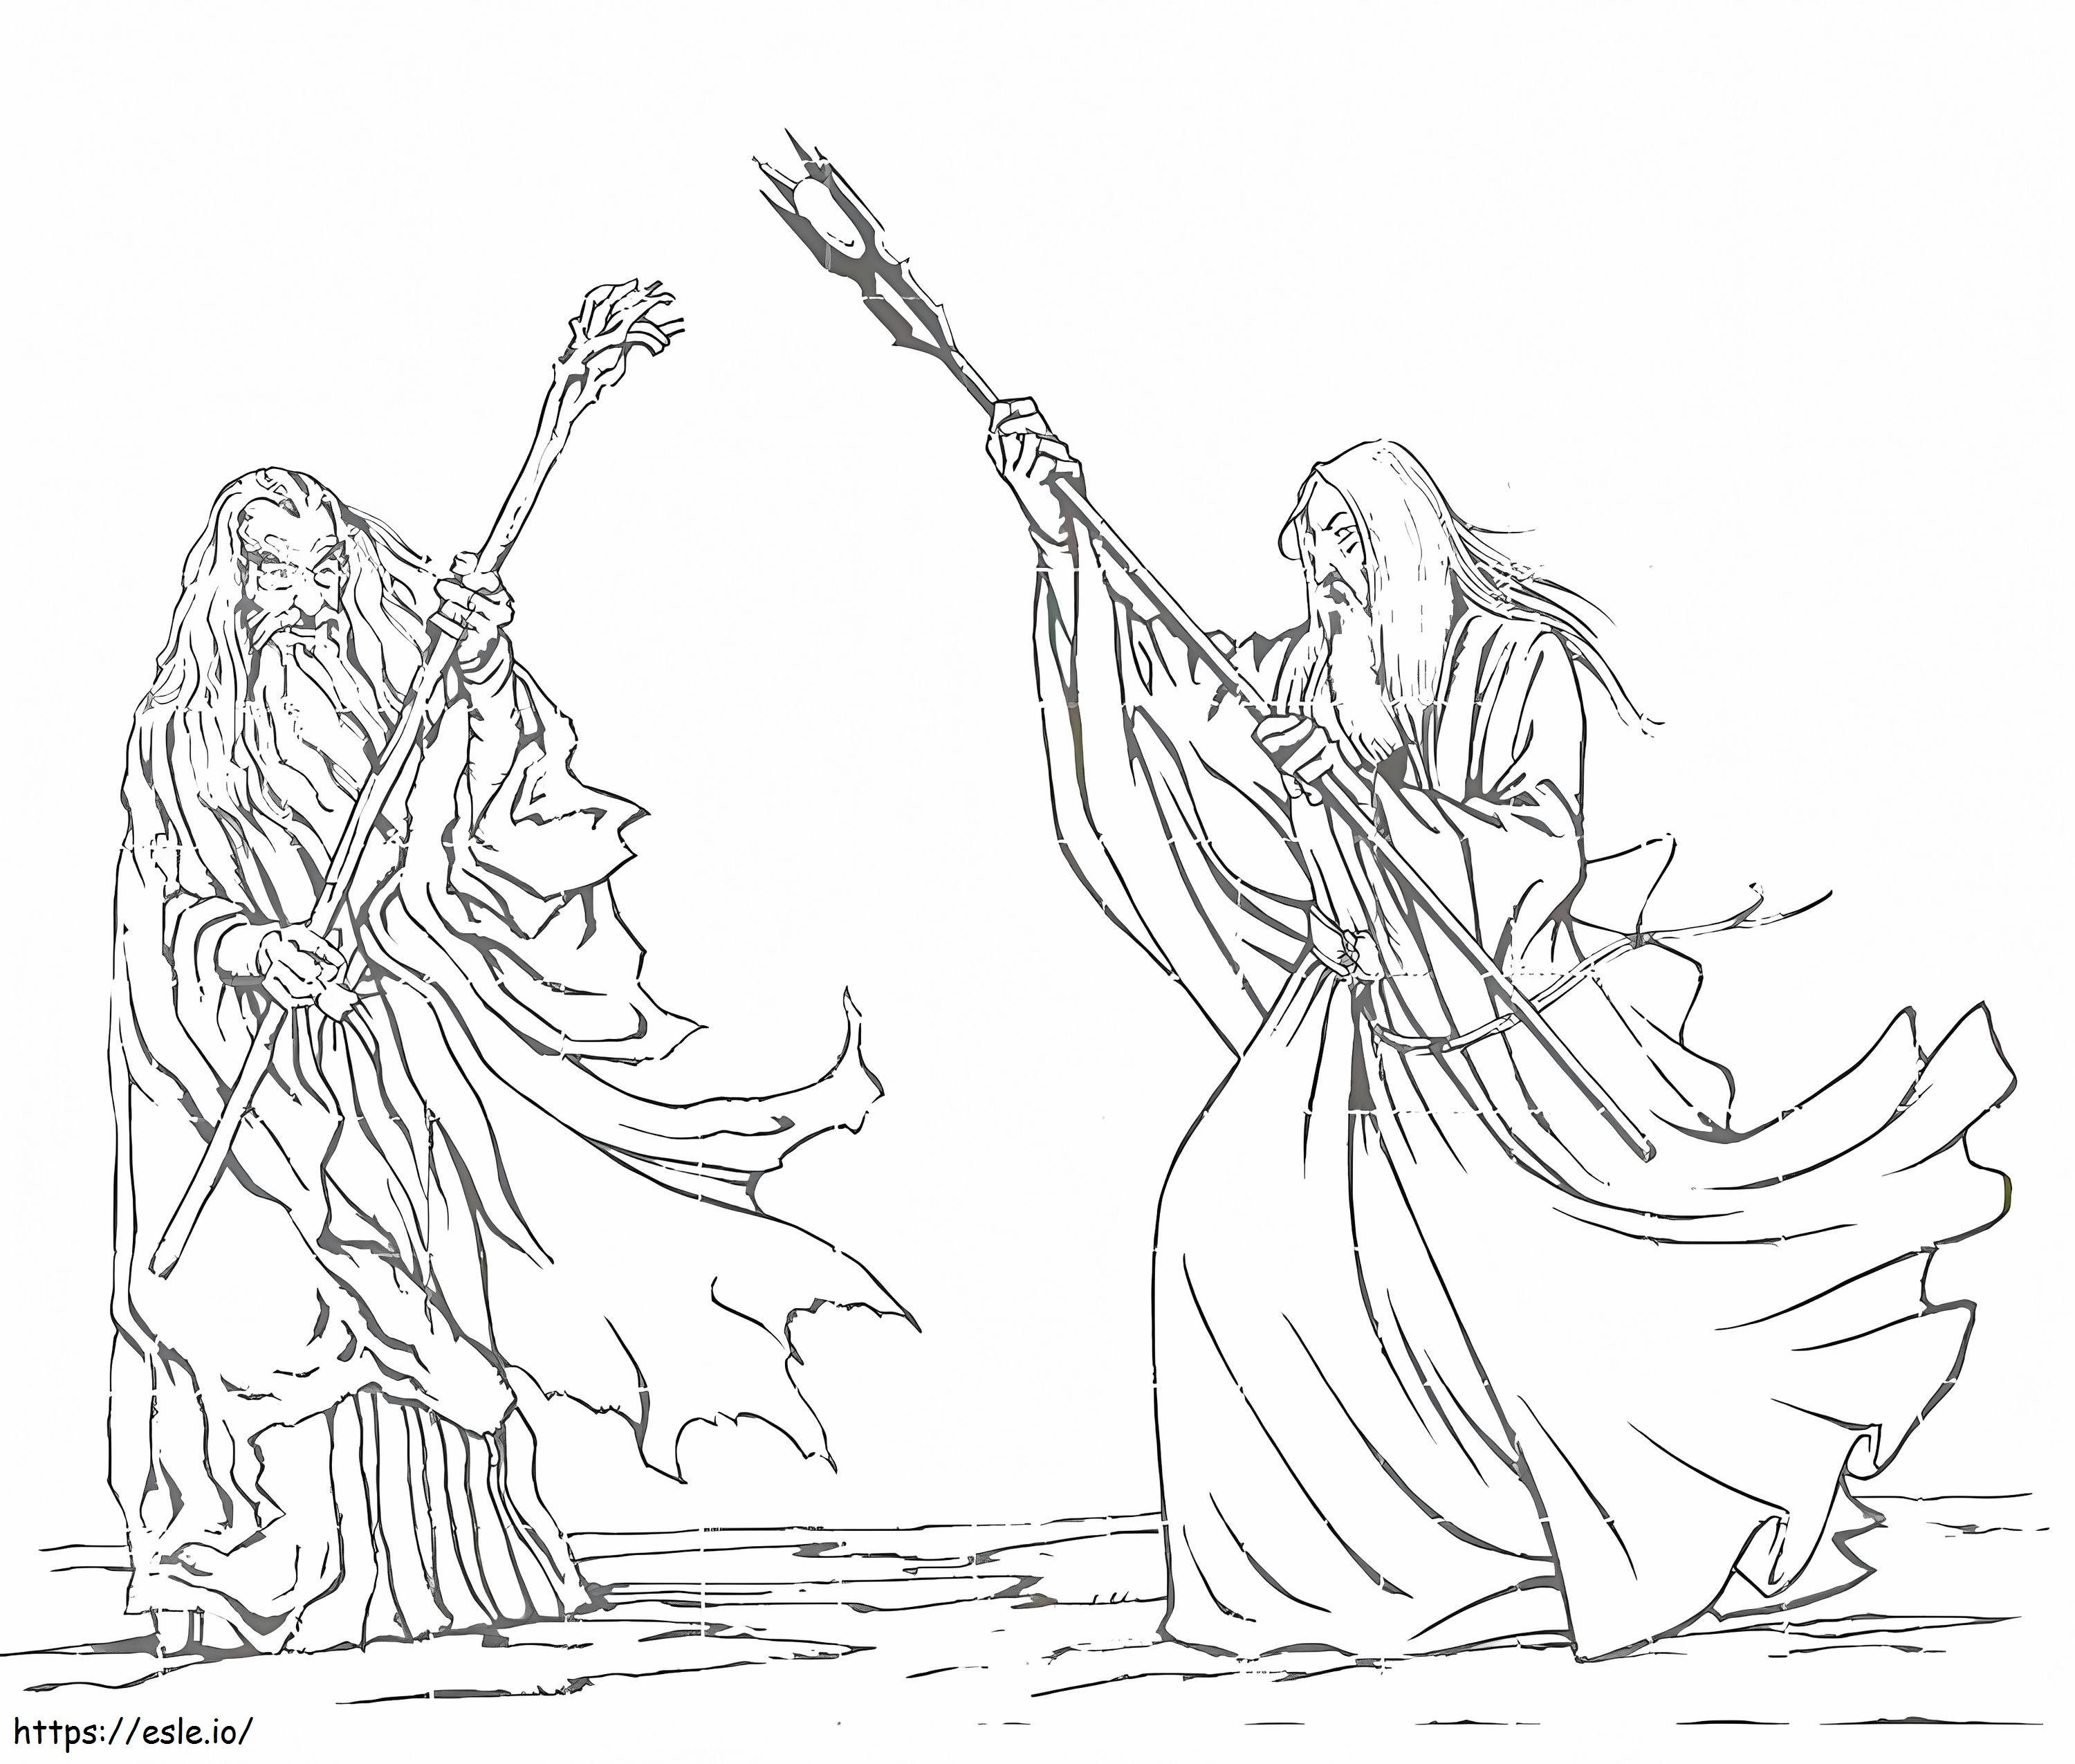 Gandalf And Saruman coloring page